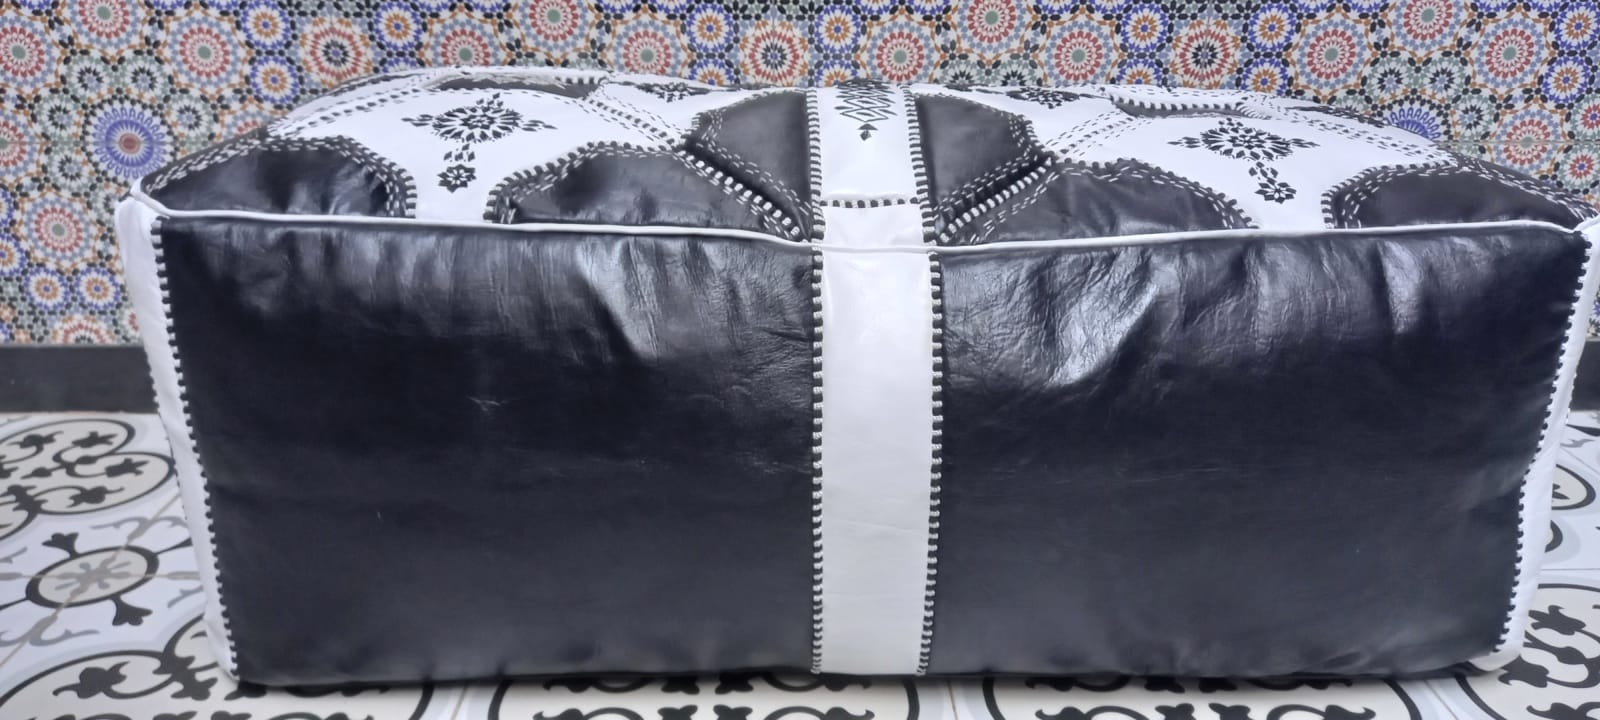  Pouf leather and Sabra silk Black, White Morocco